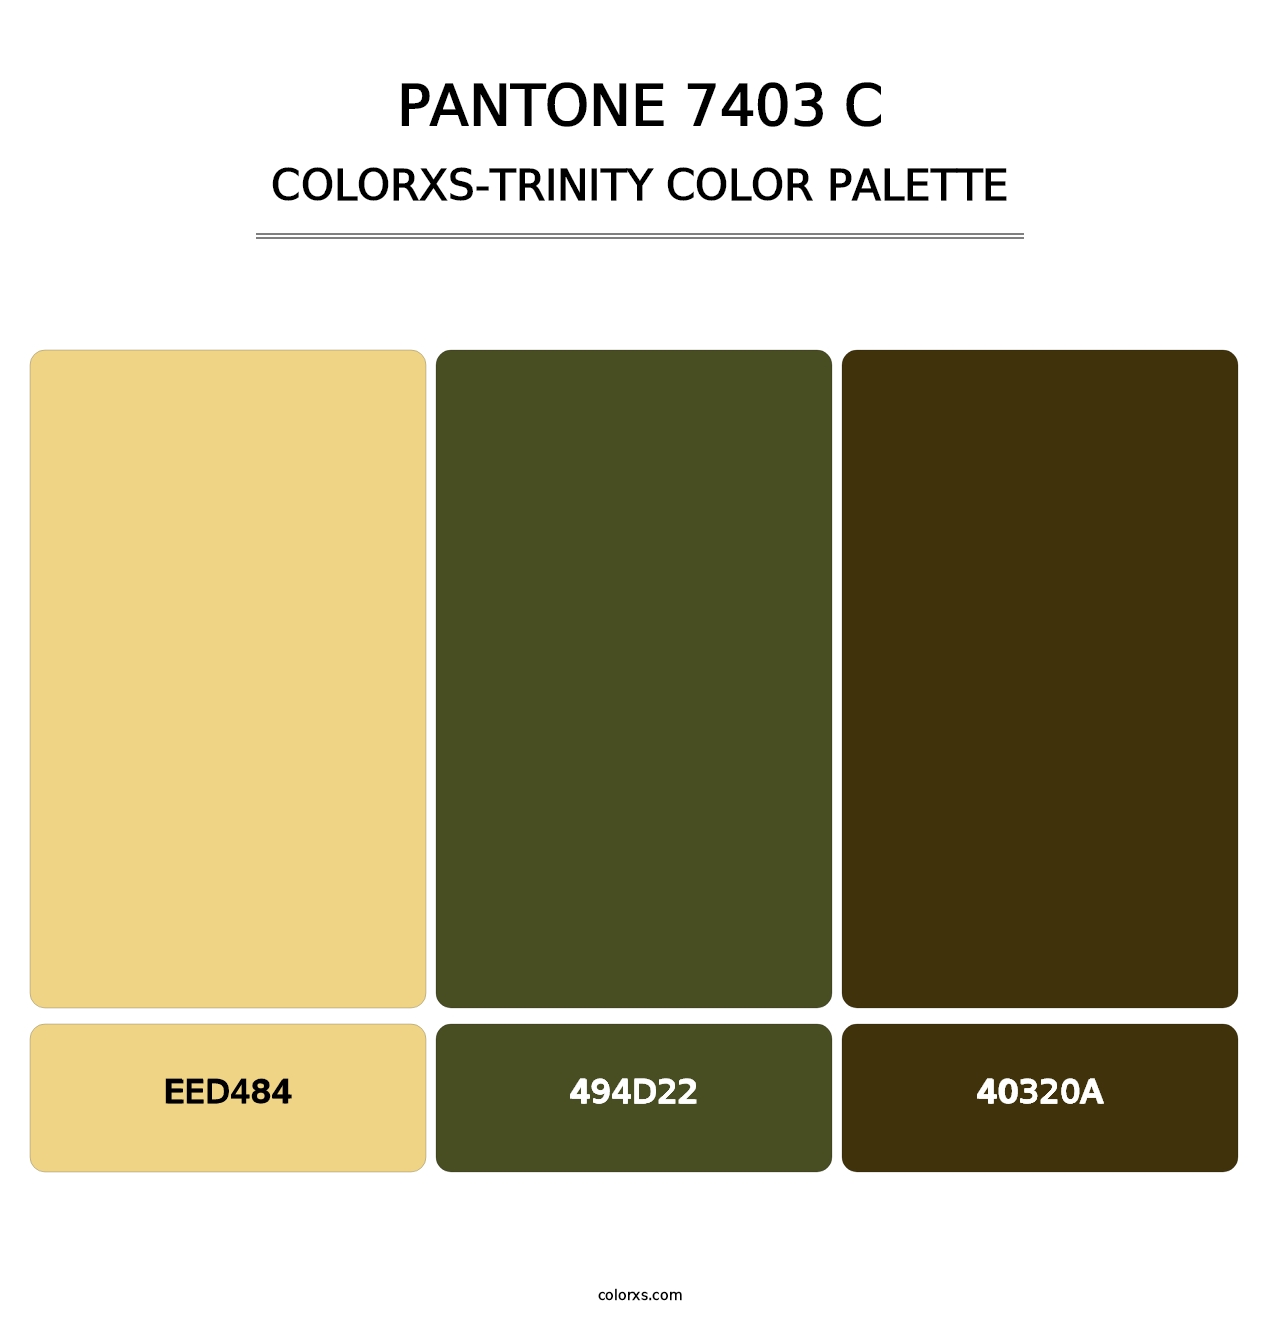 PANTONE 7403 C - Colorxs Trinity Palette